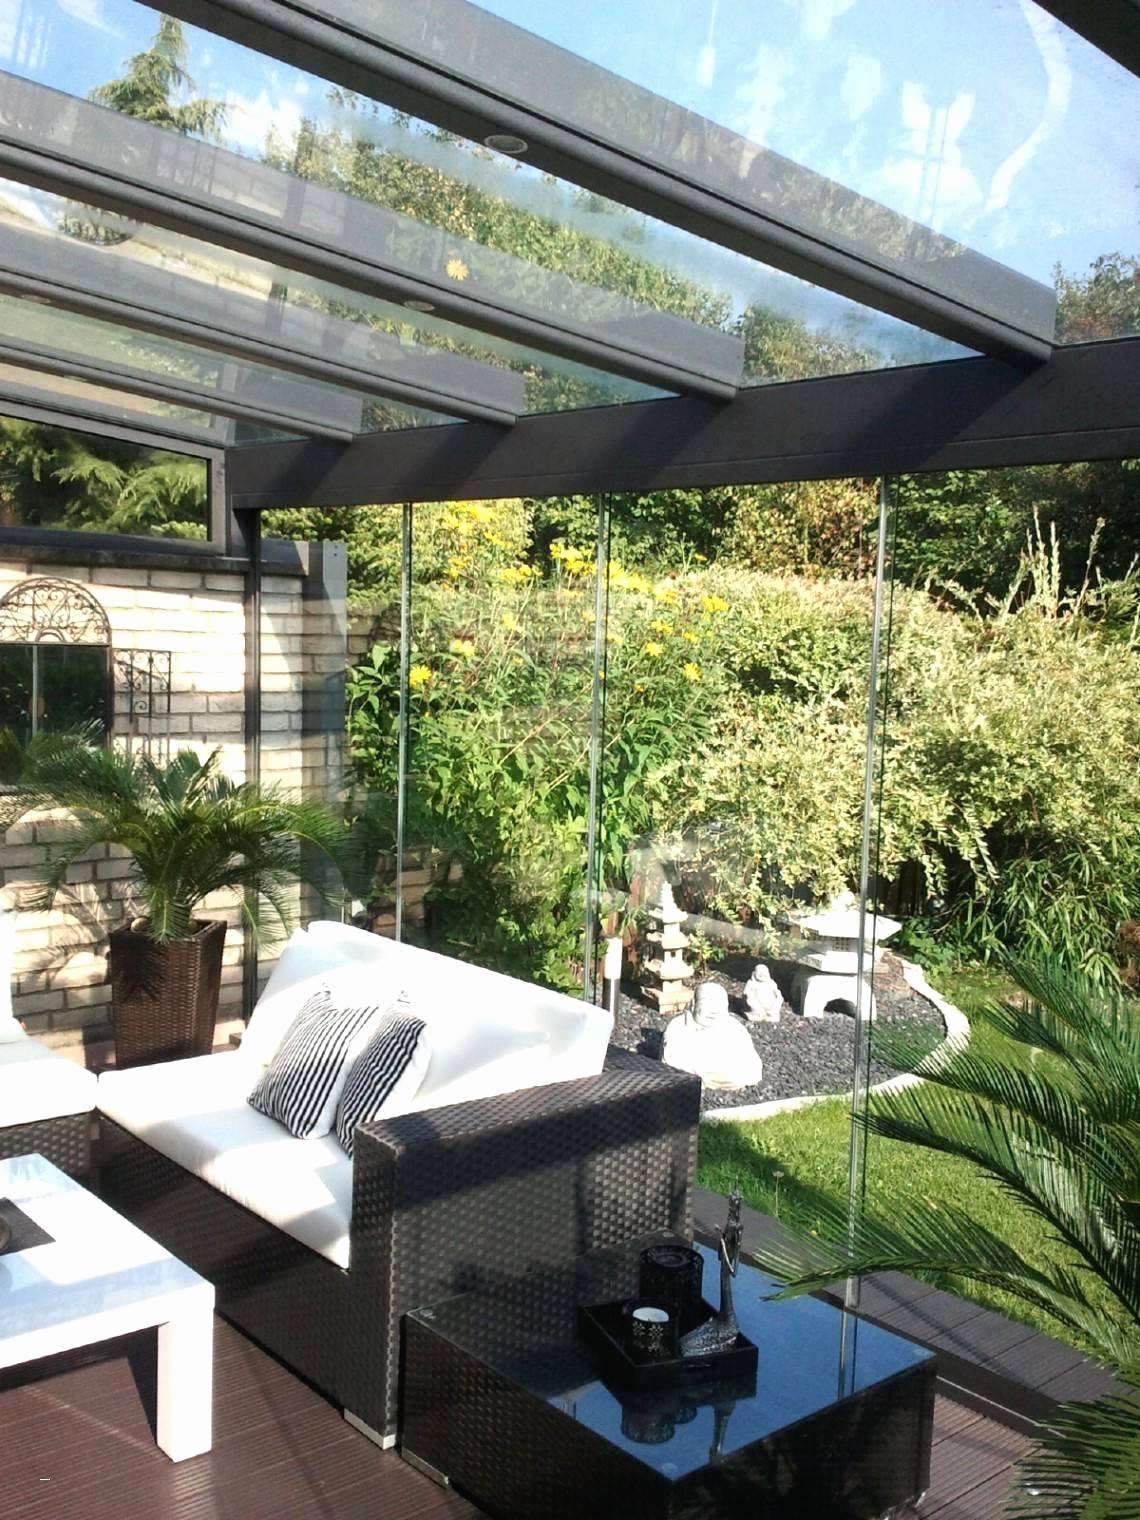 garten terrassen ideen luxus kleingarten gestalten ideen of garten terrassen ideen